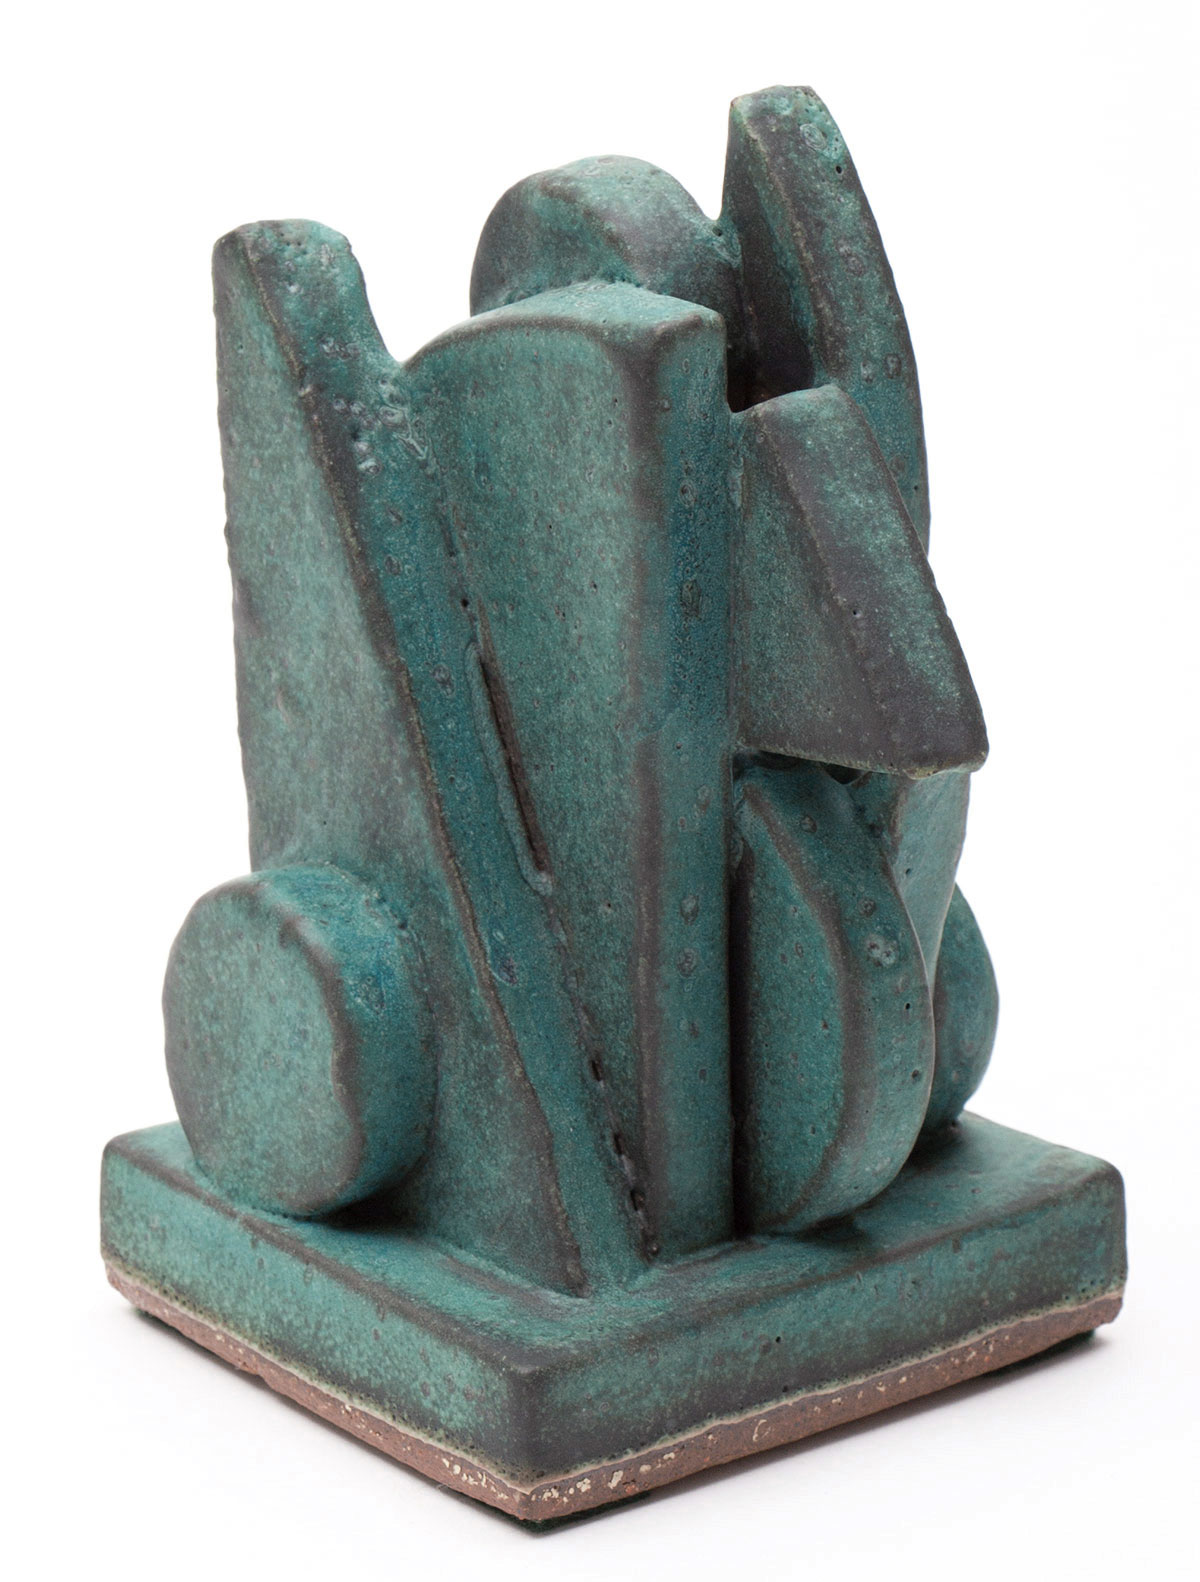 1686 judy engel ceramic sculpture 0007